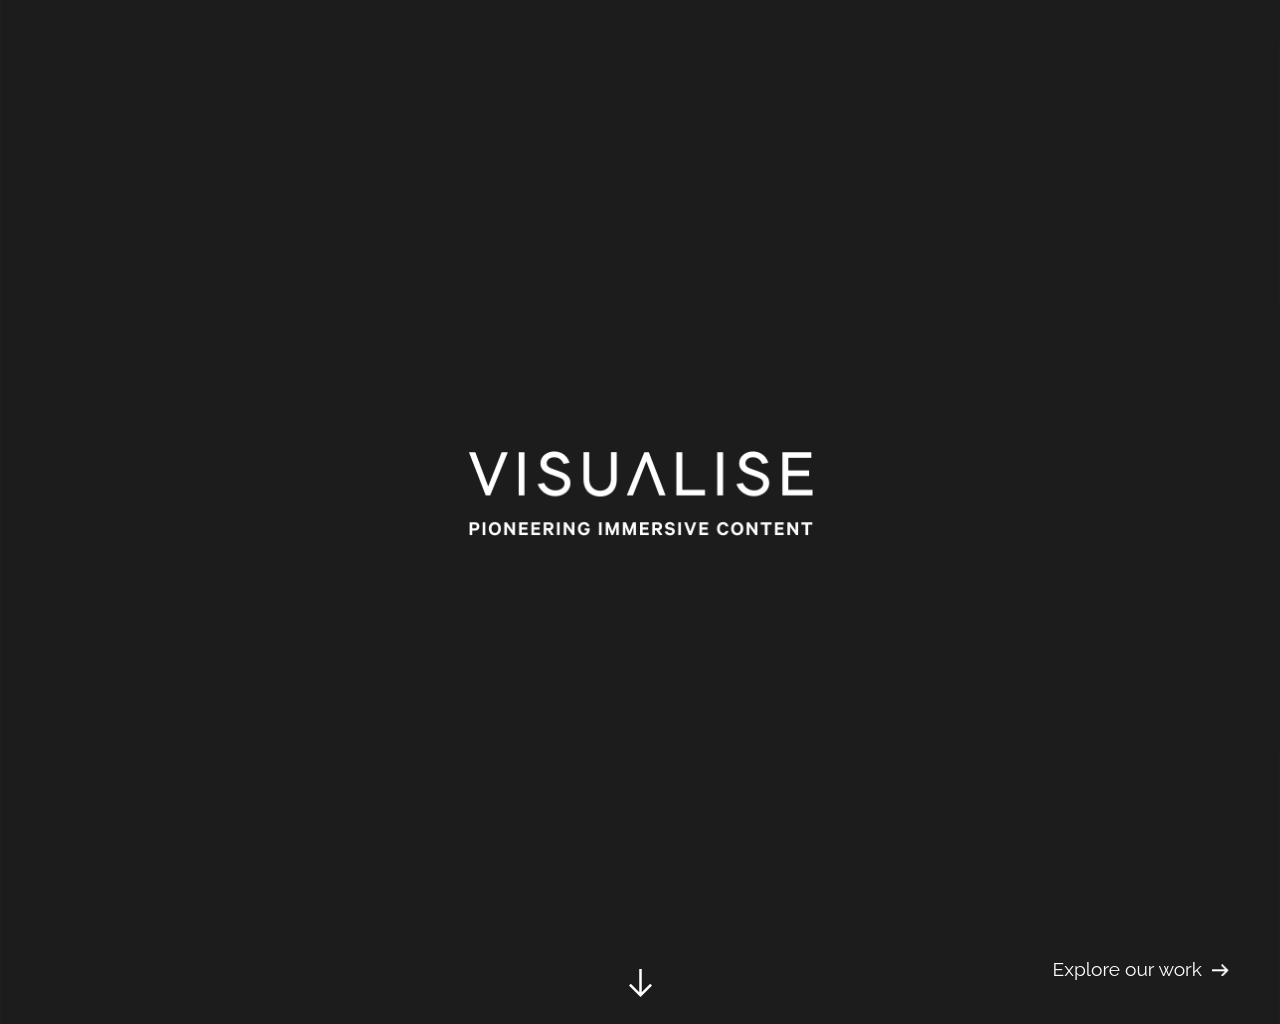 visualise.com